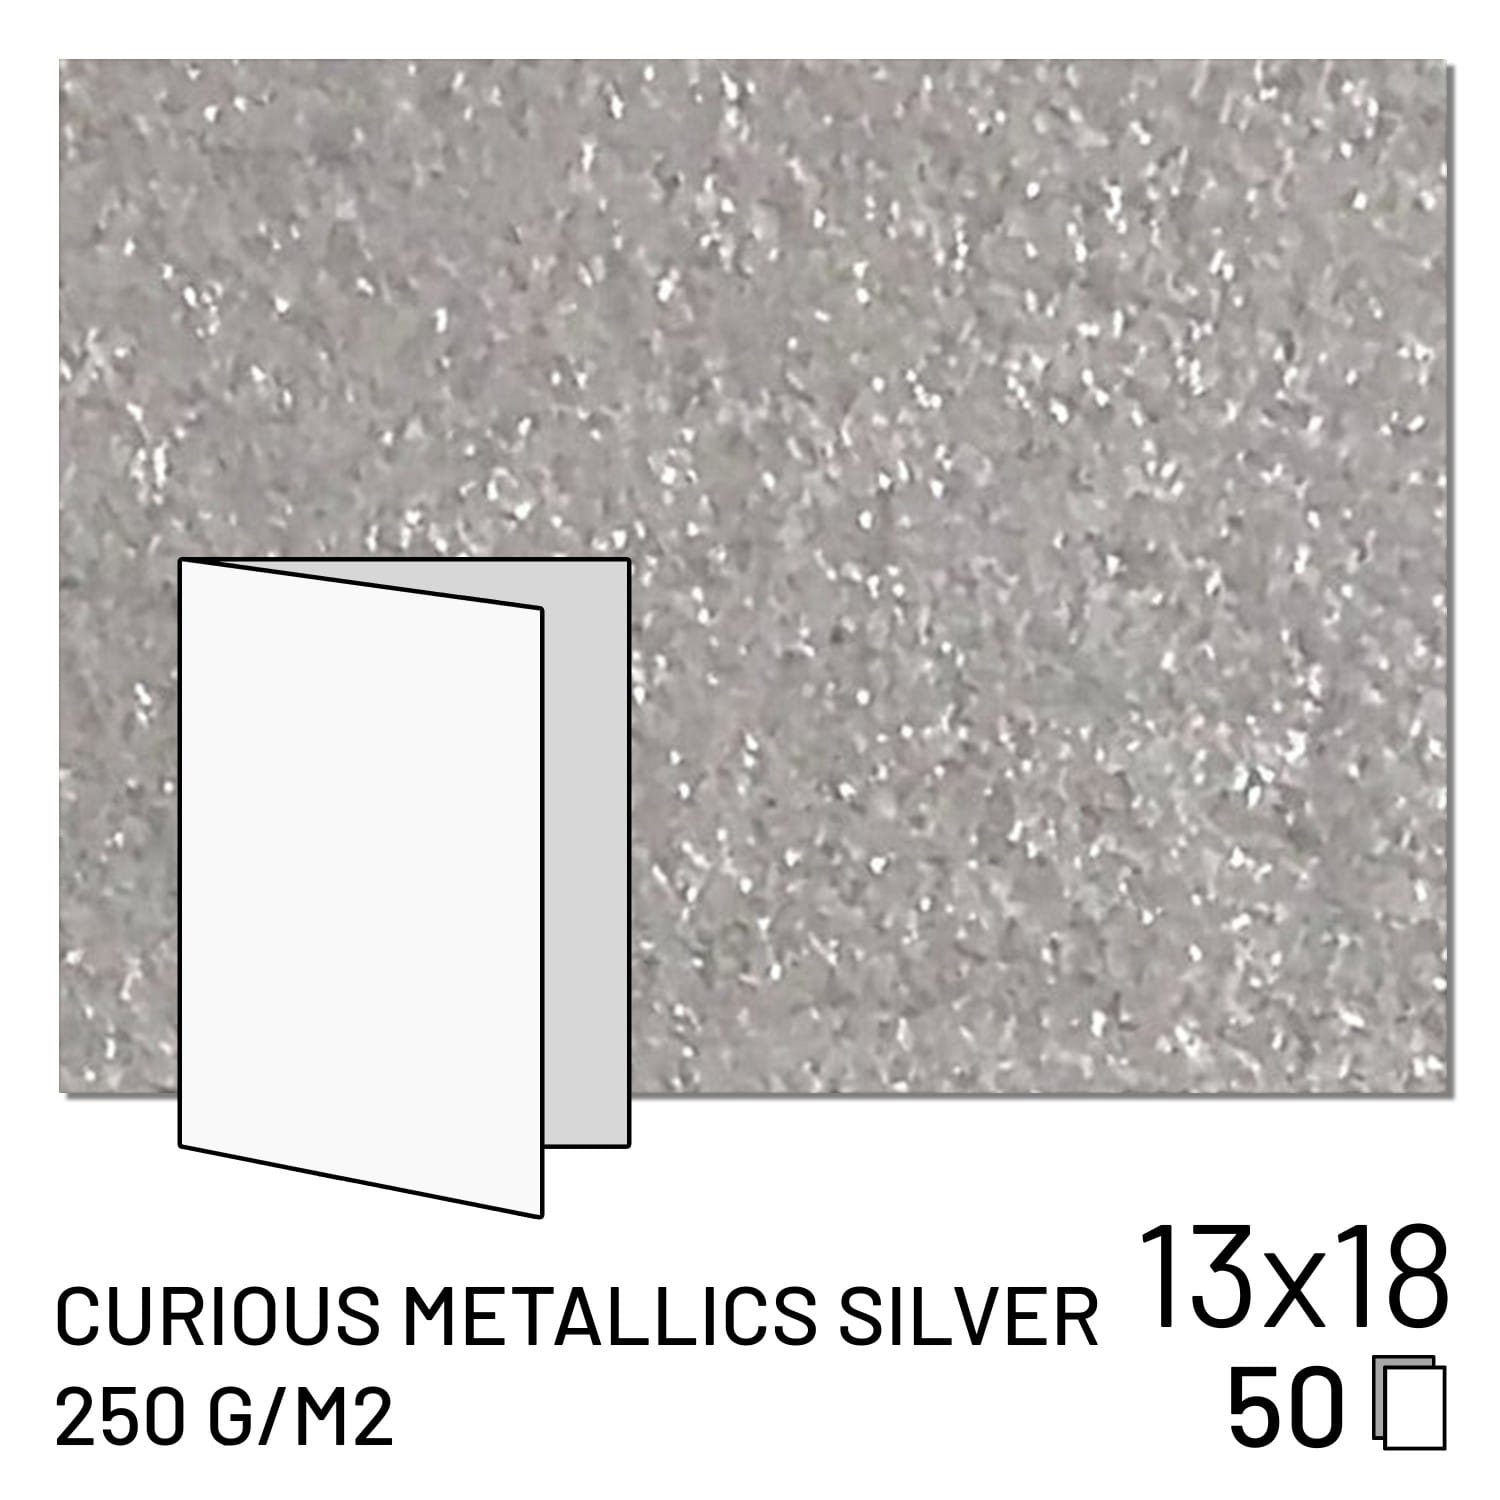 Papier FUJI Curious Metallics Silver - 250g 13x18 / 2 volets (50 feuilles)  (70100148096)